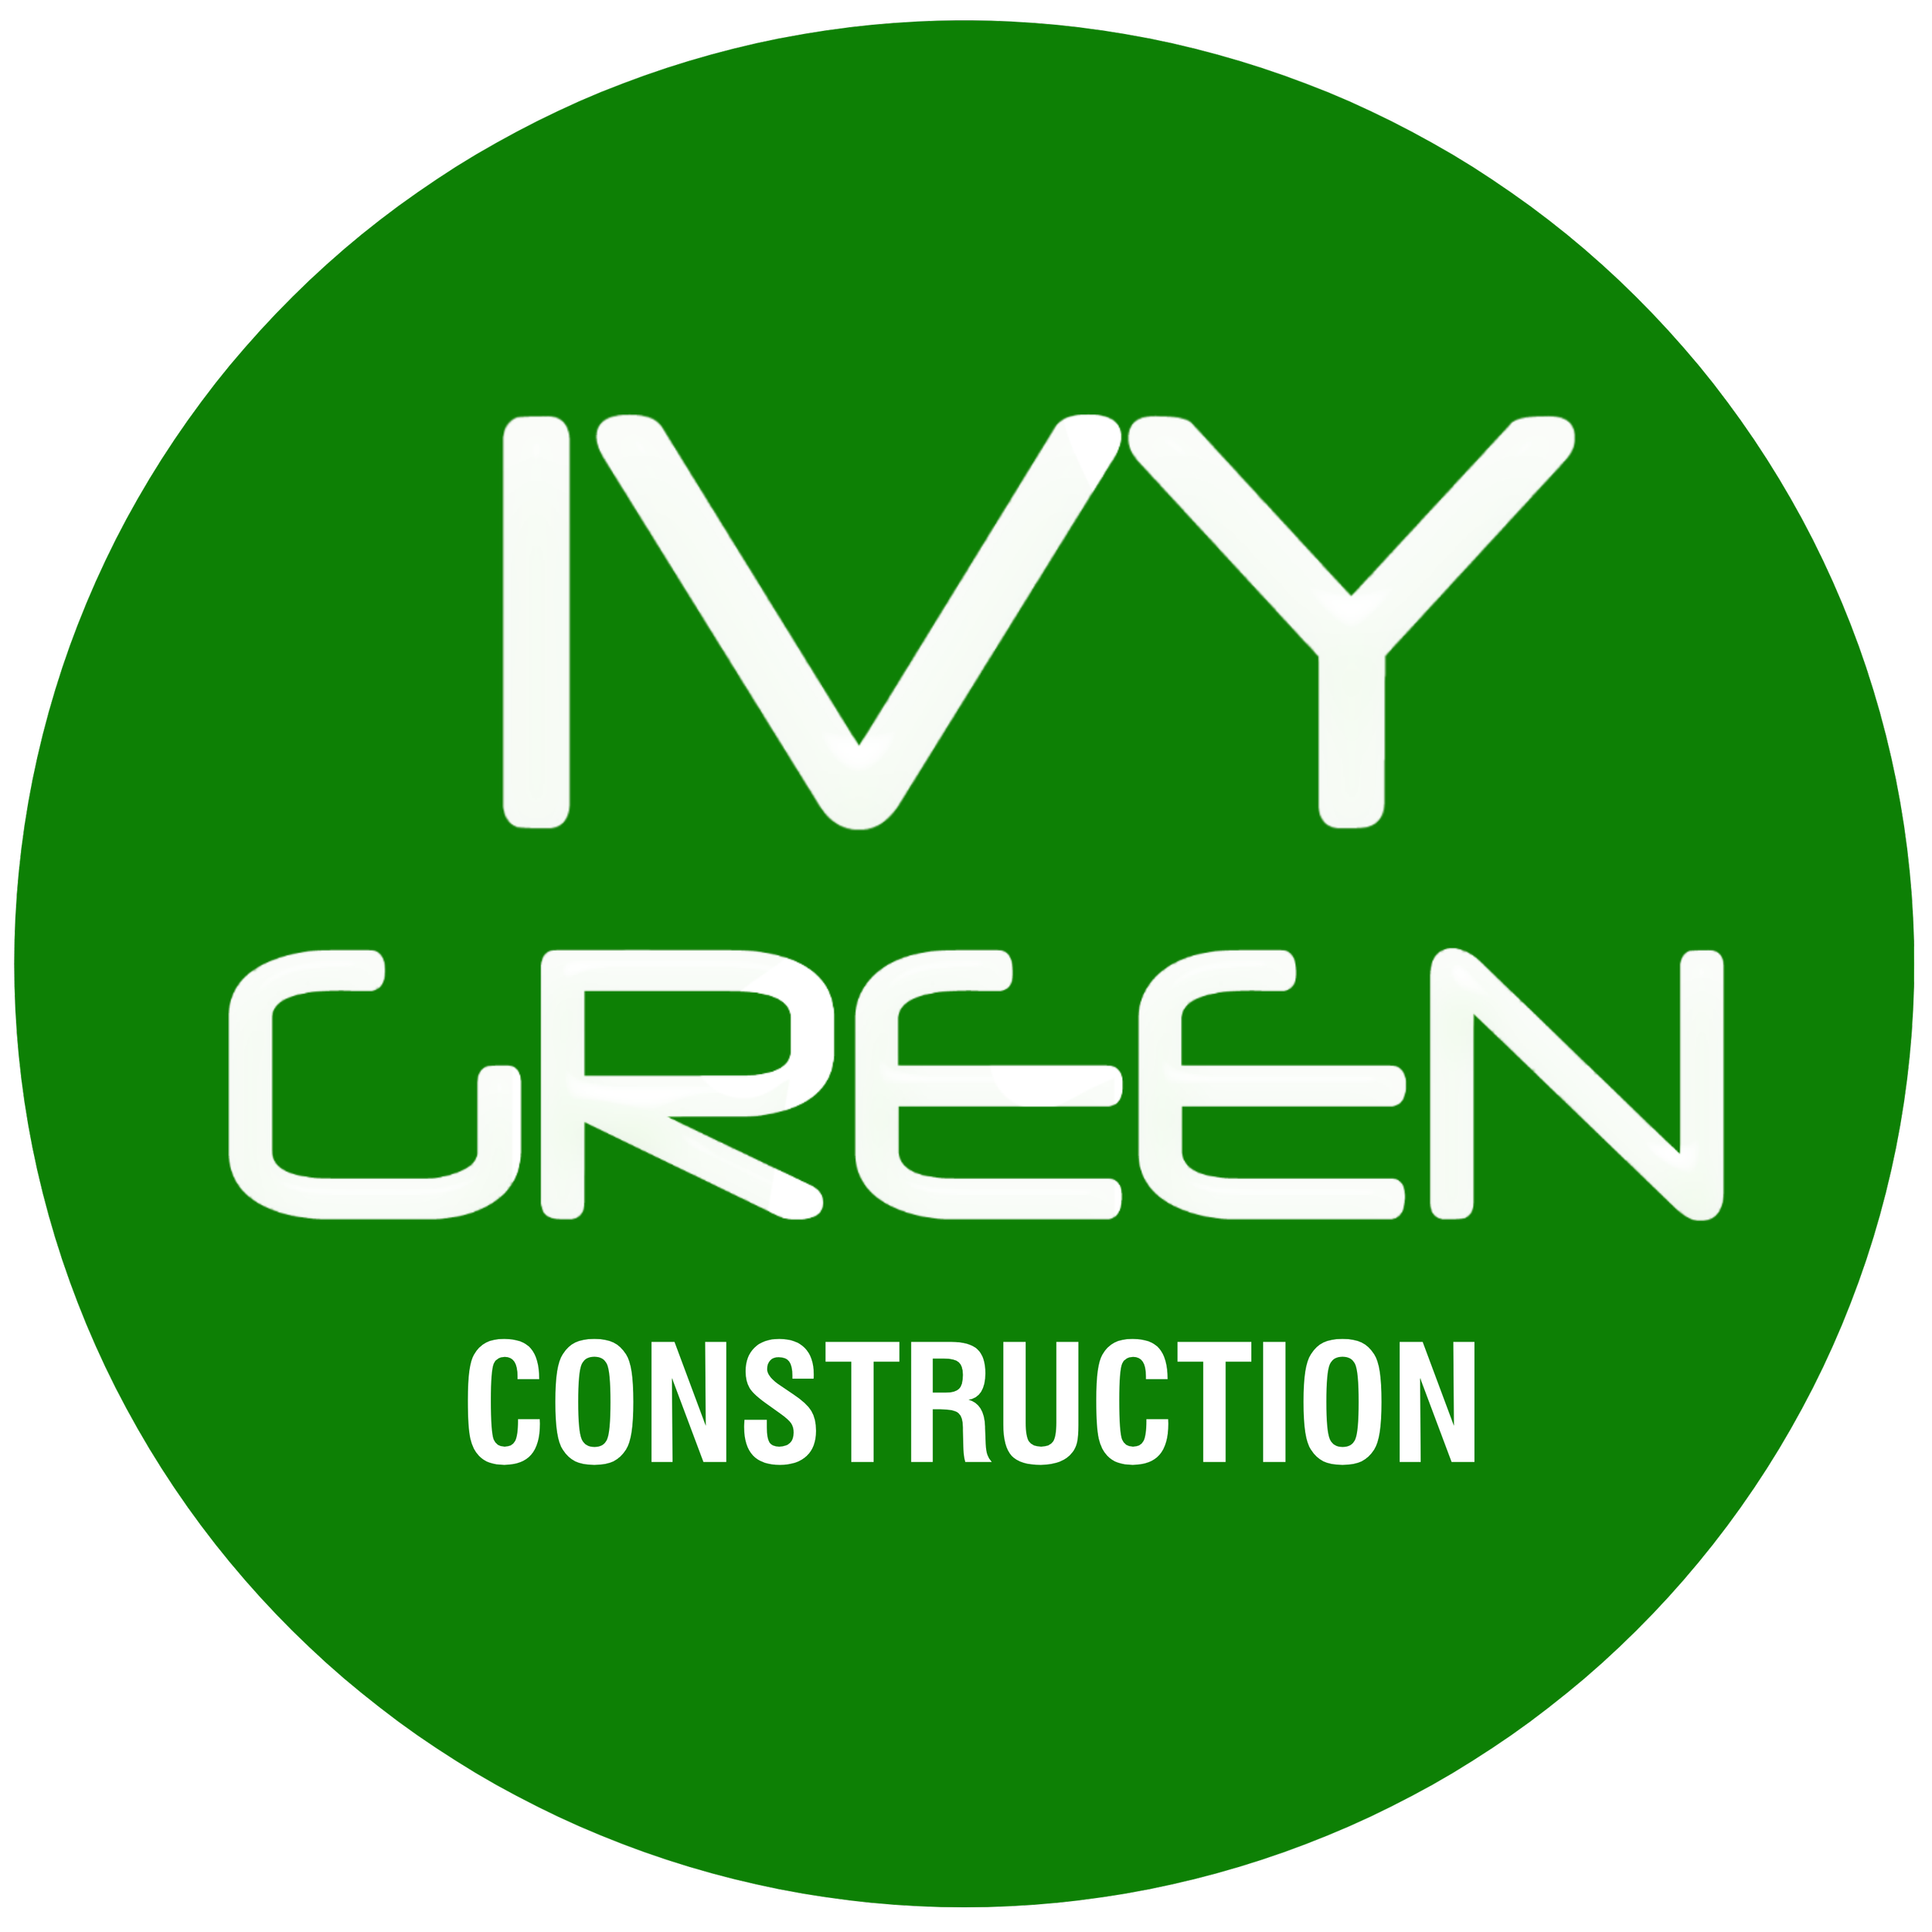 Ivy Green Construction